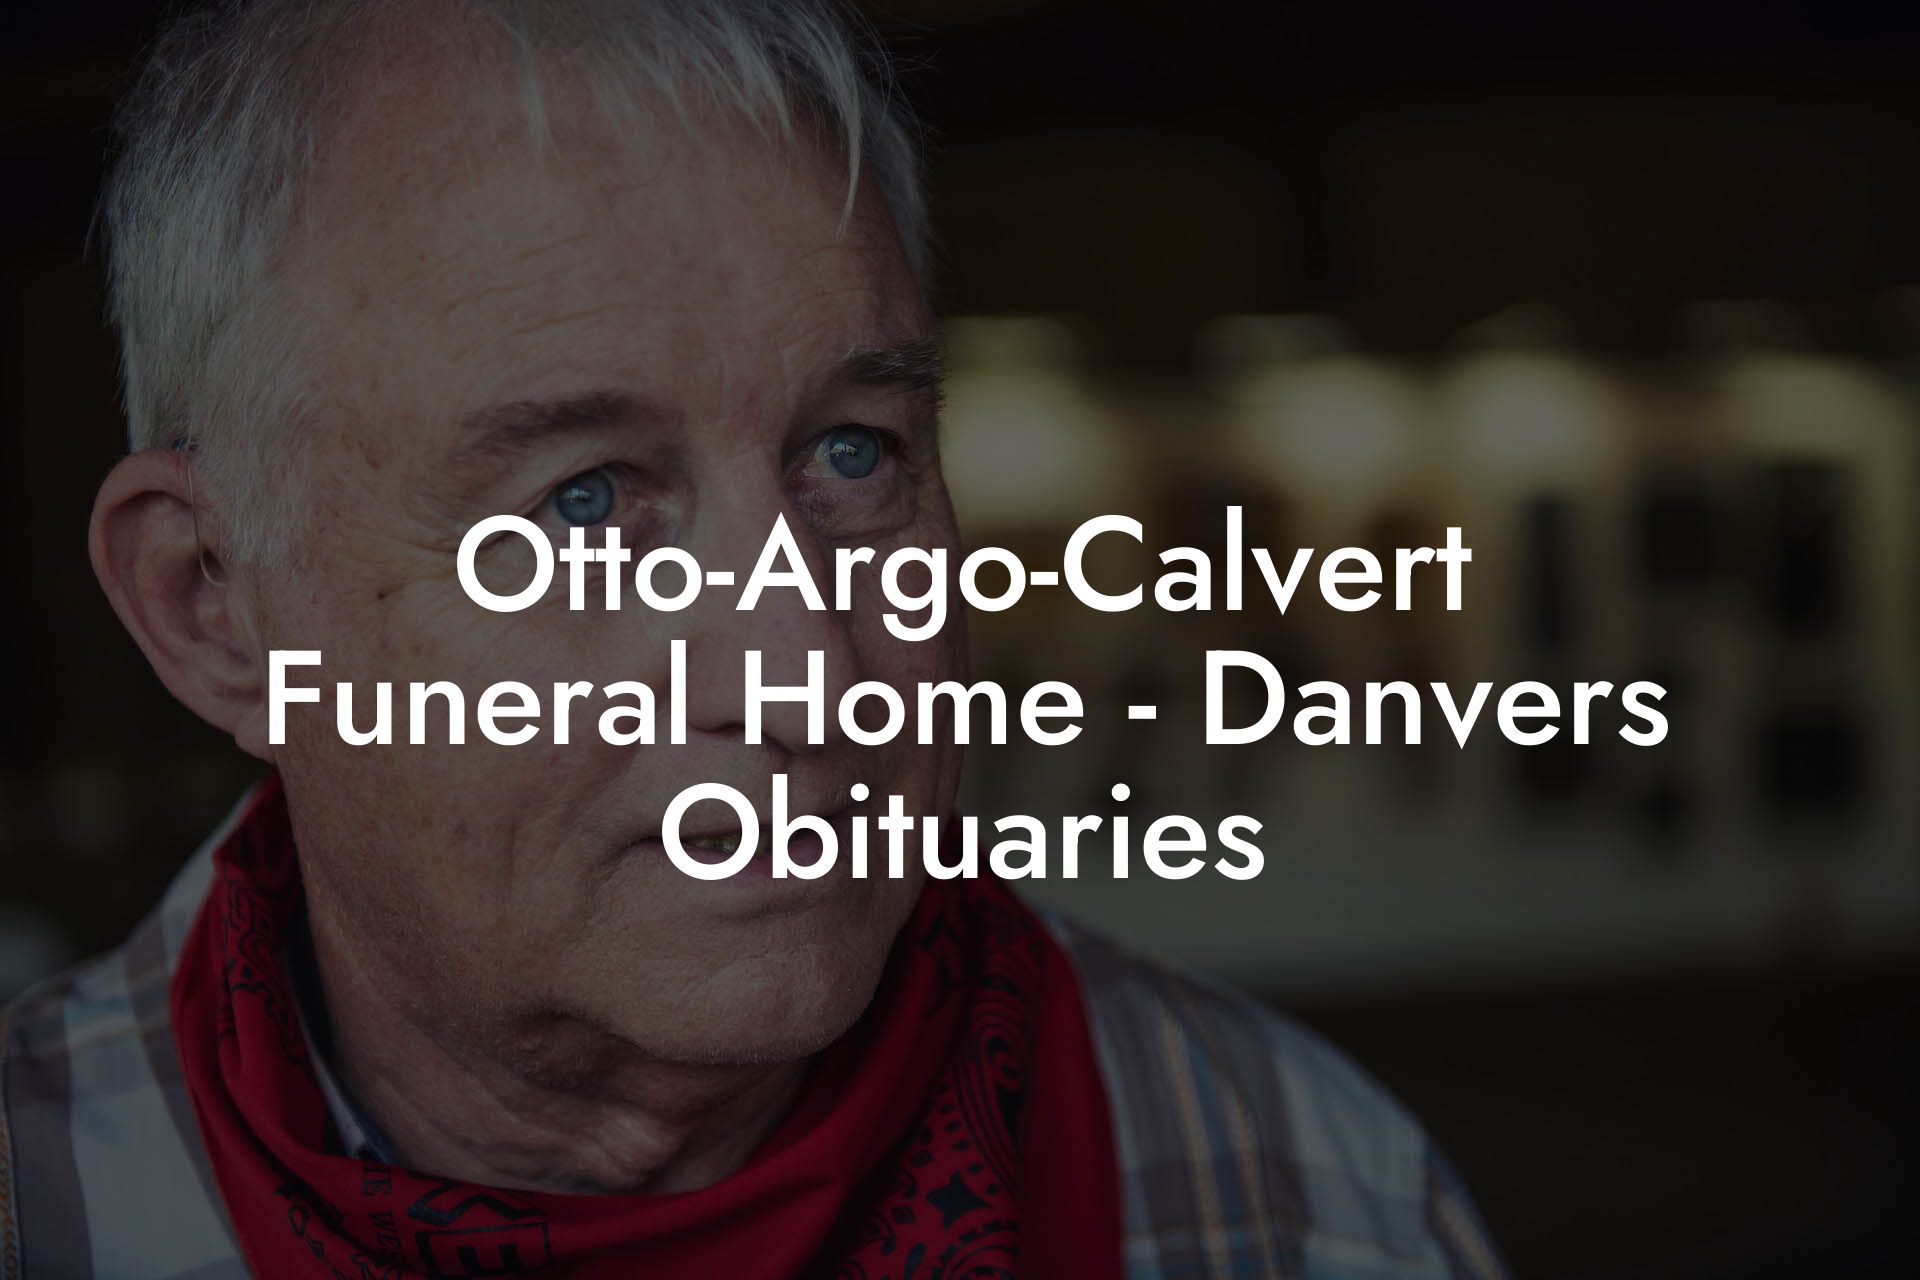 Otto-Argo-Calvert Funeral Home - Danvers Obituaries